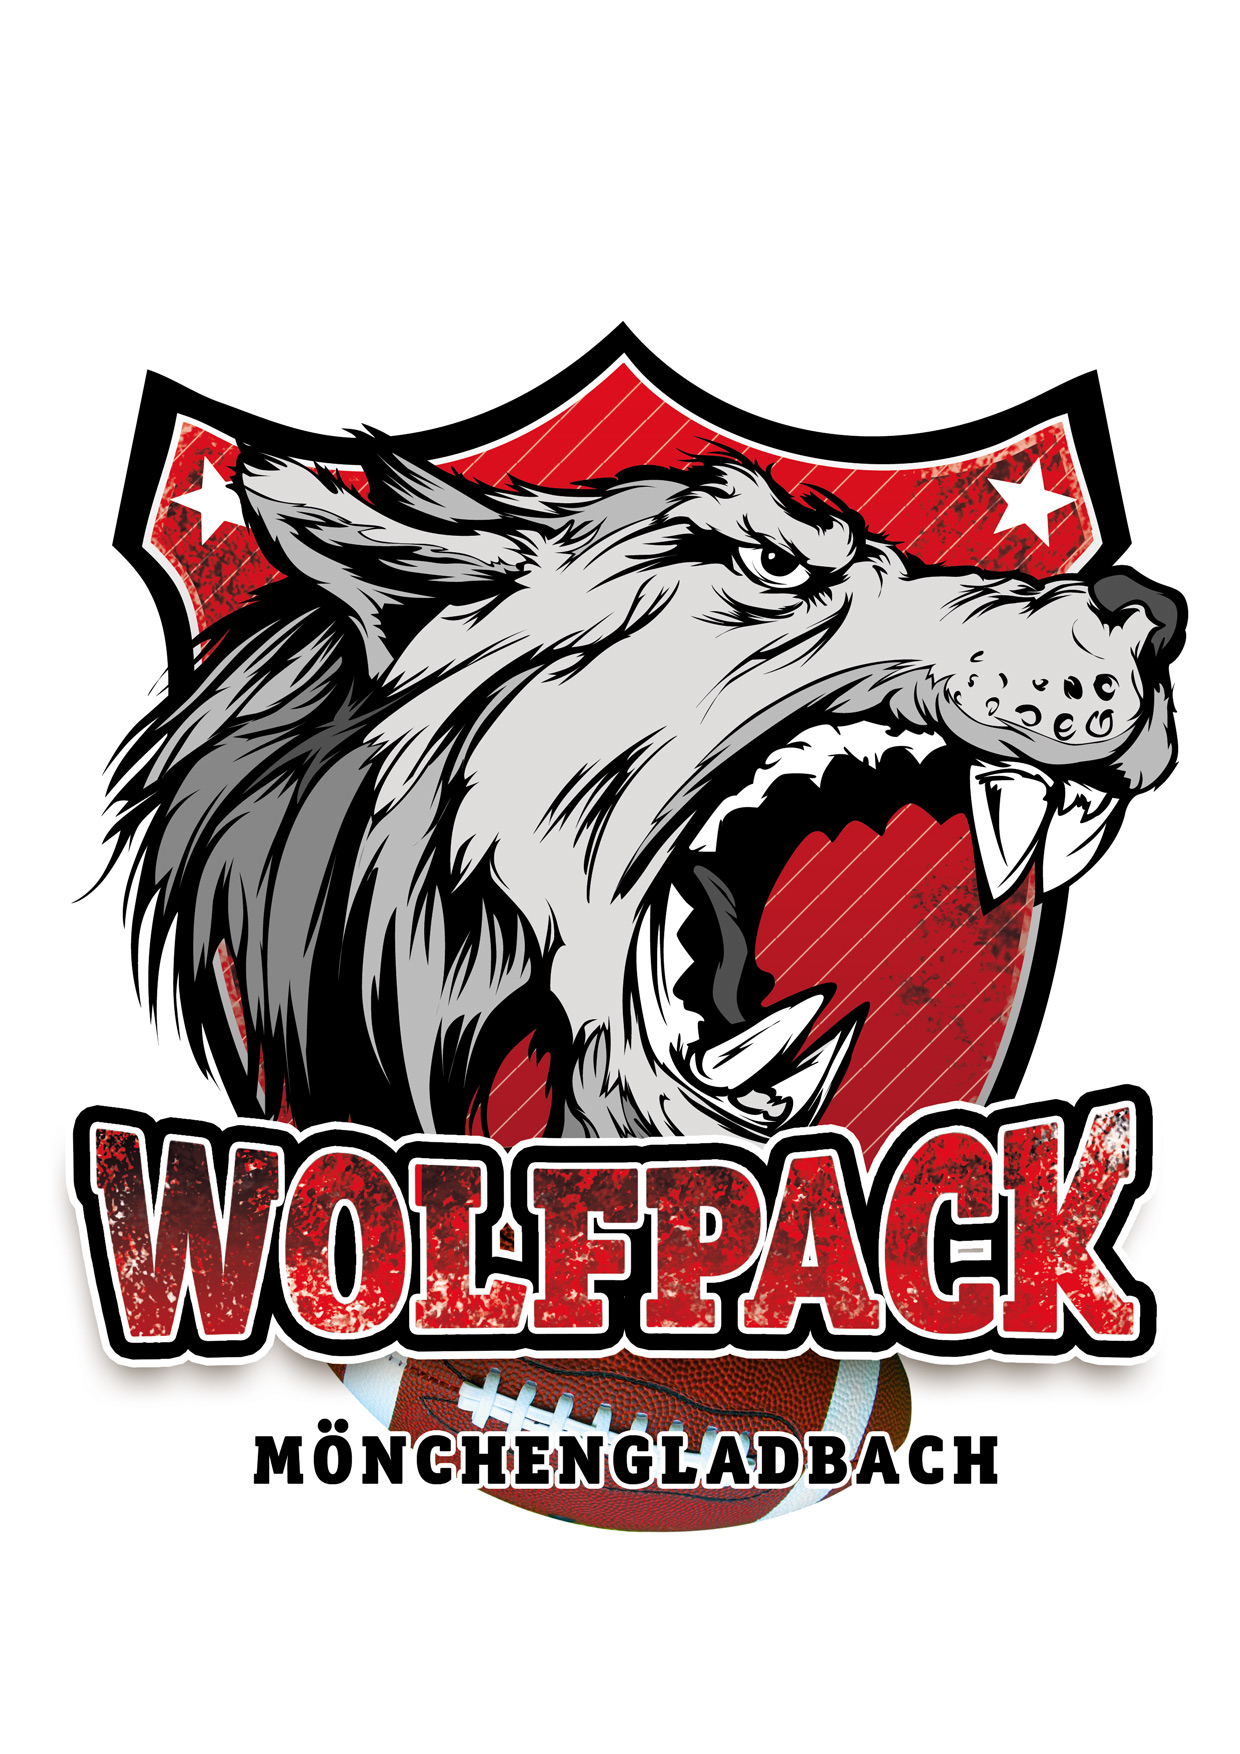 Mönchengladbach Wolfpack U19